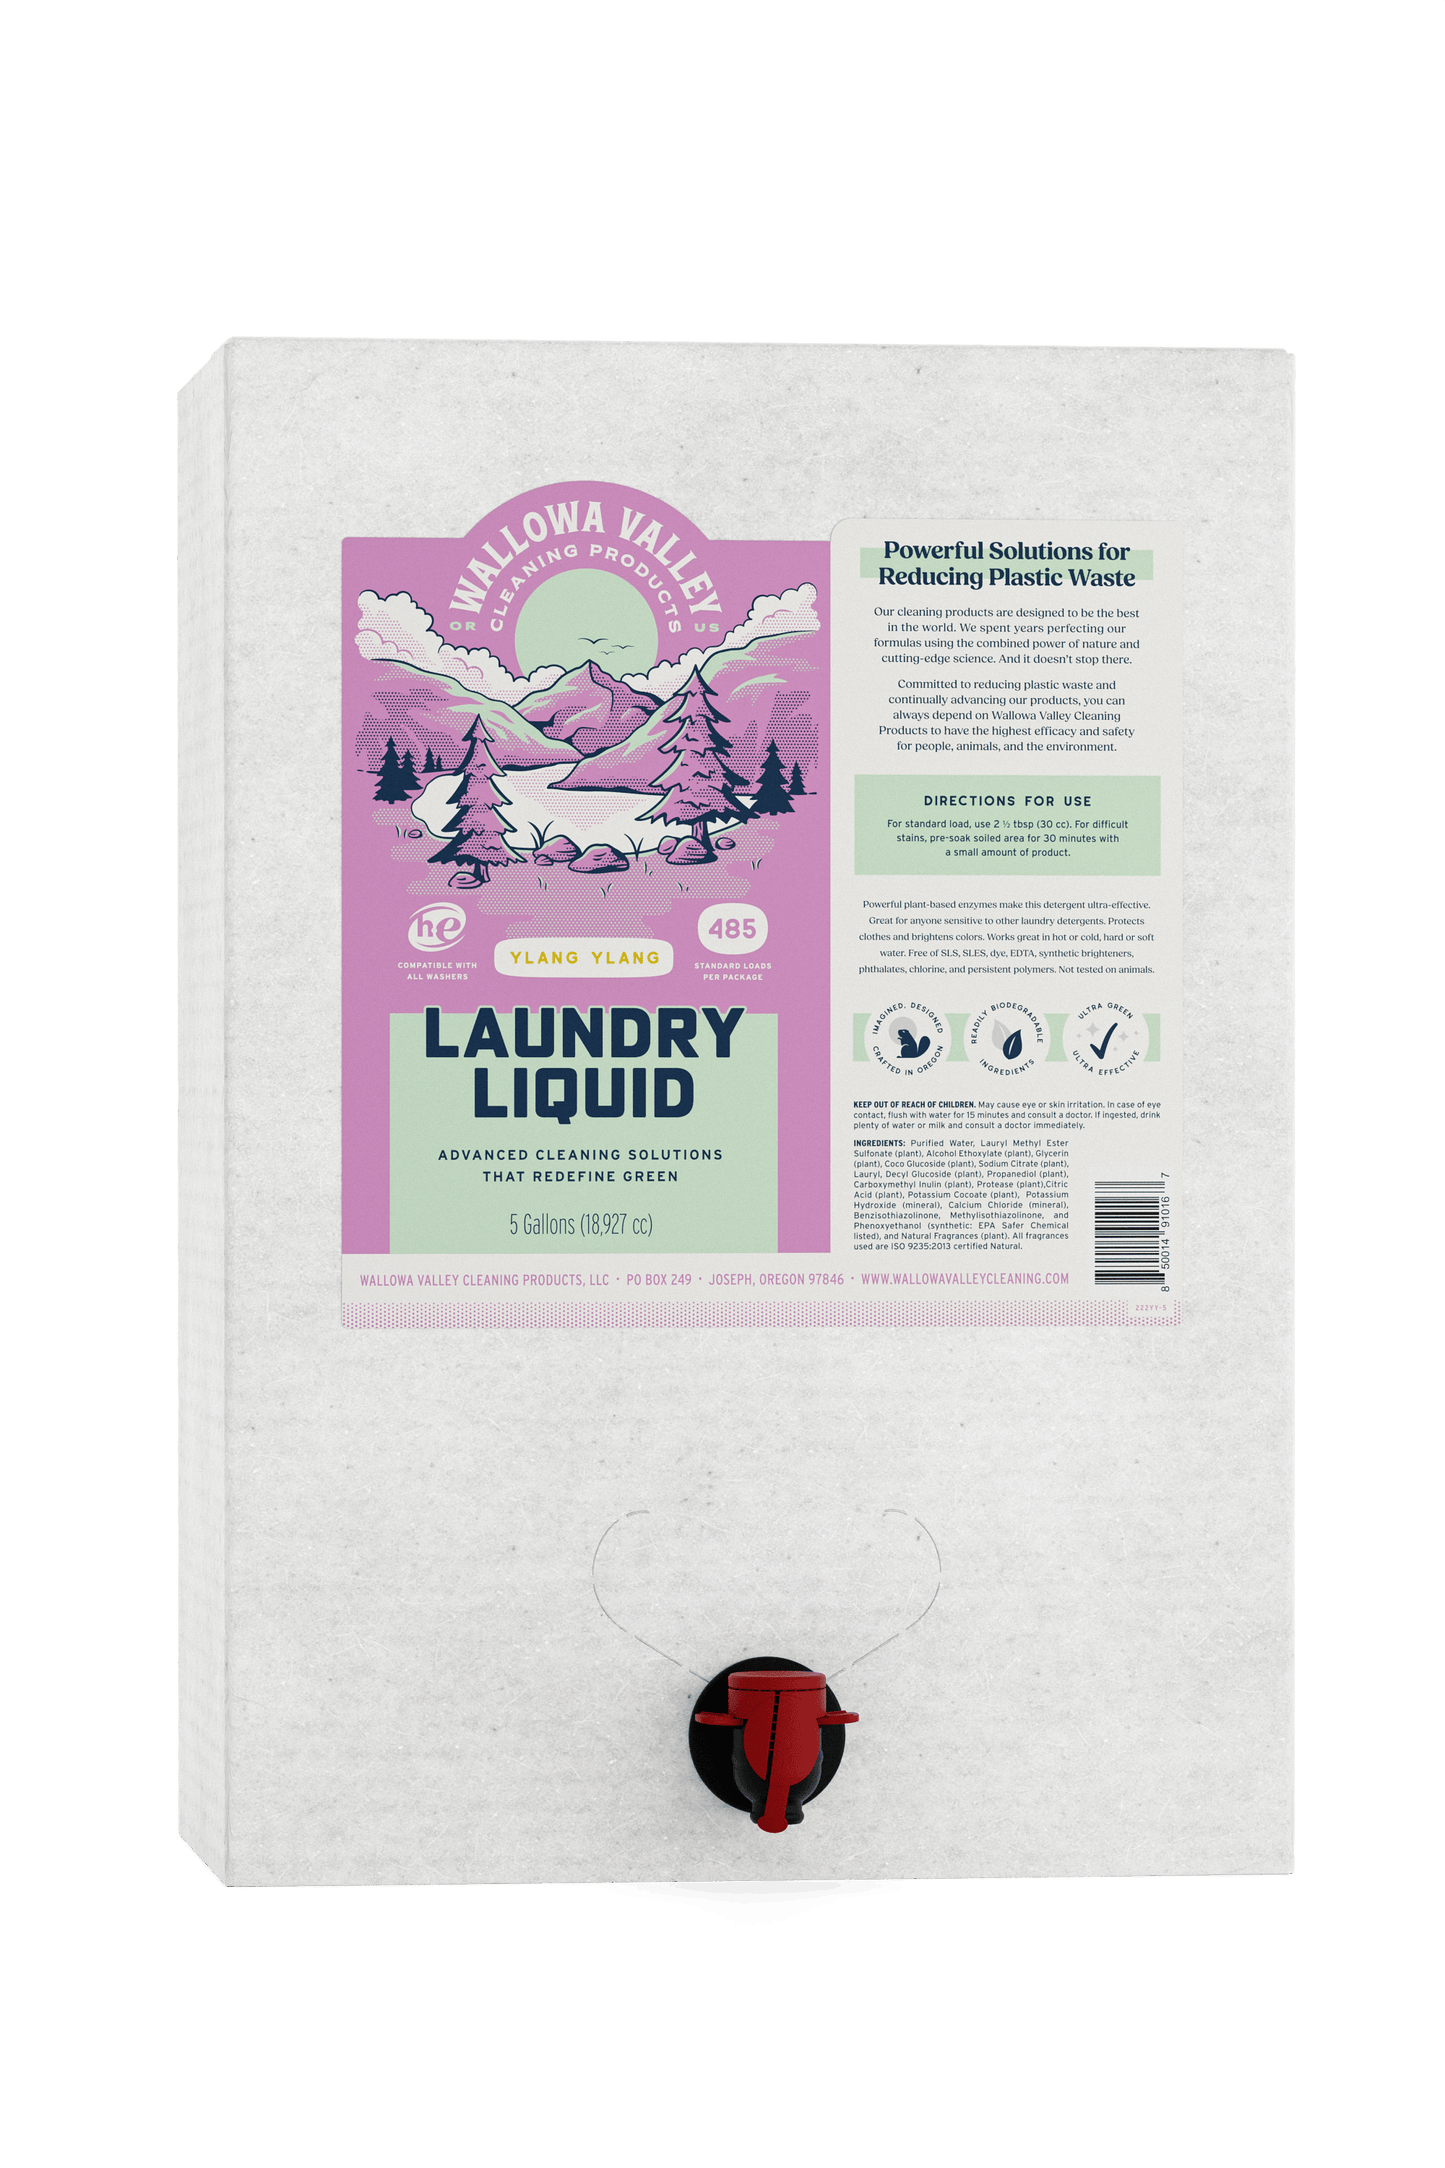 Liquid Laundry - Regular